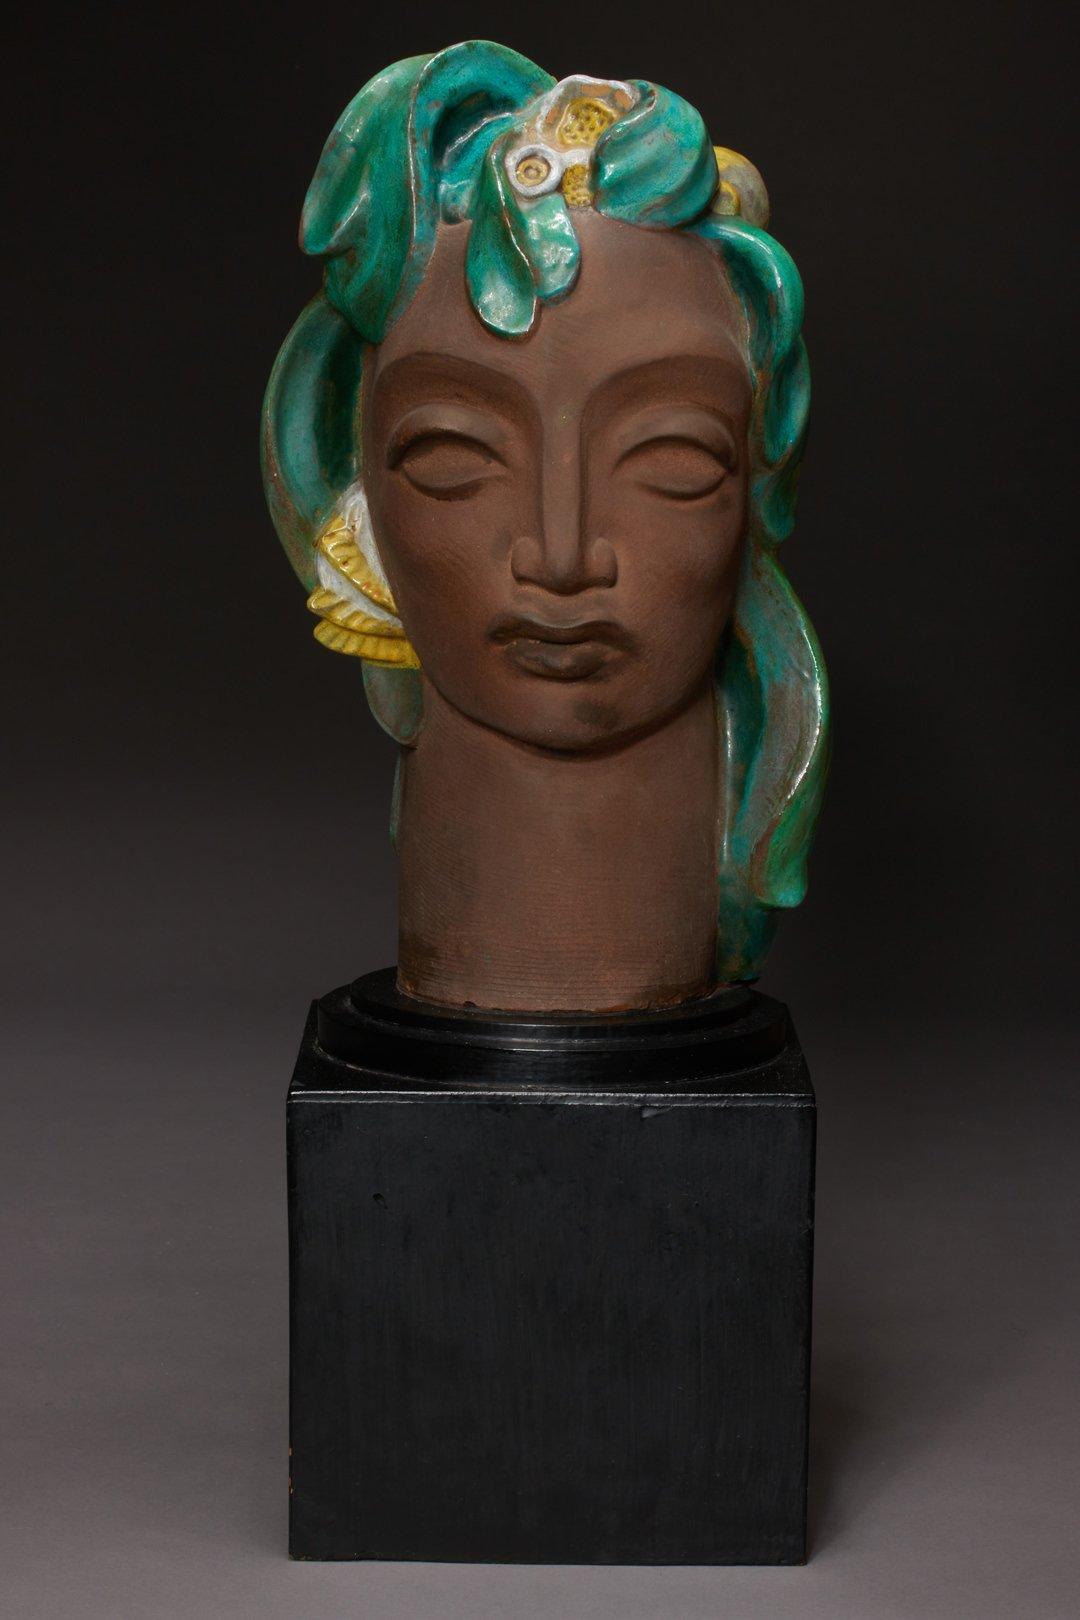 Edris Eckhardt Figurative Sculpture - Earth, Ceramic Figural Female Head by Cleveland School Artist